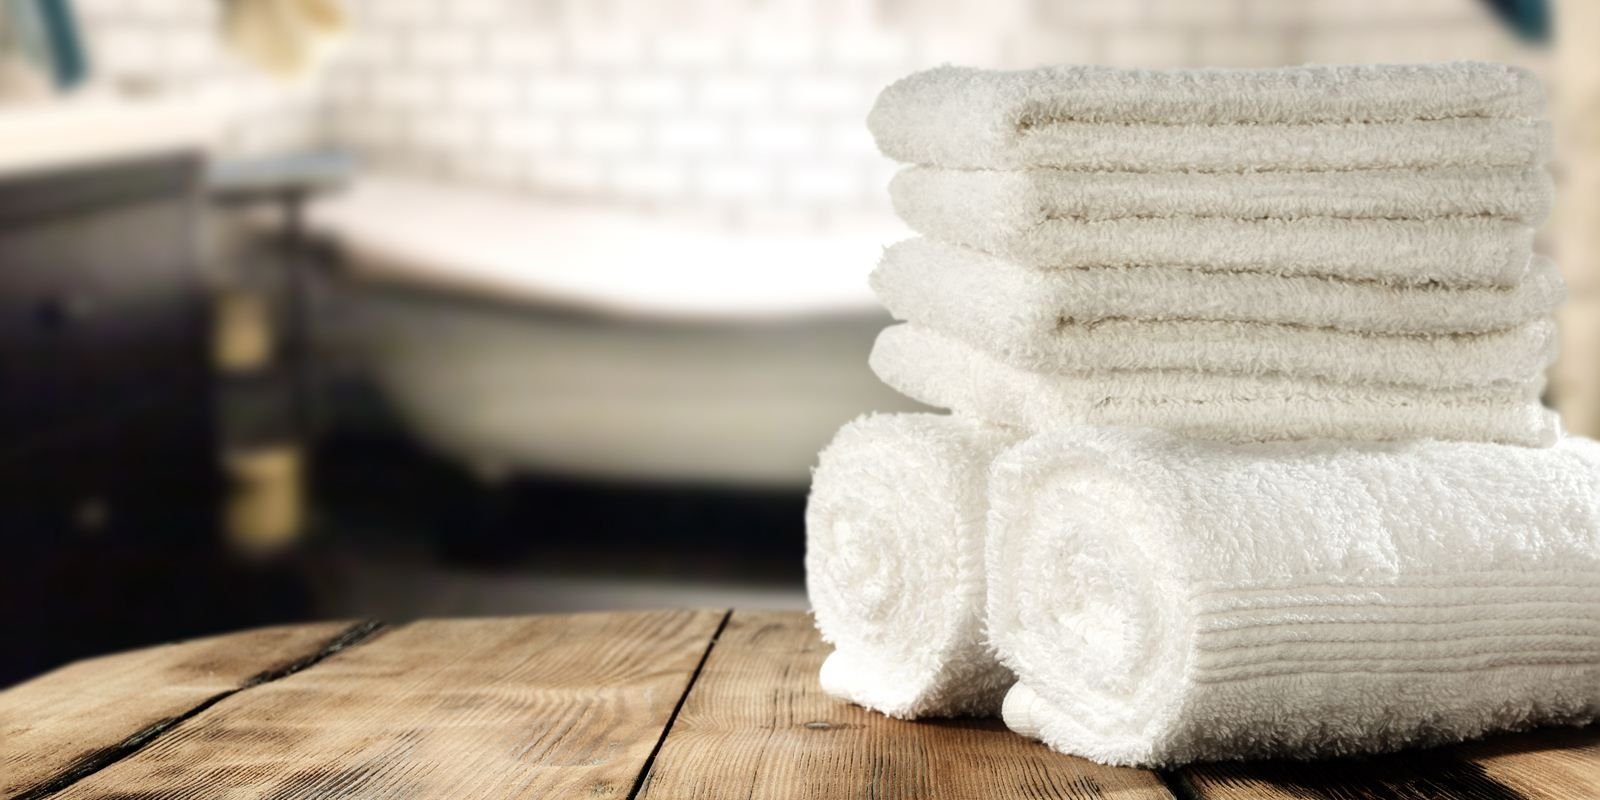 Спадающее полотенце. Полотенца. Полотенца в ванной. Белое полотенце. Белые полотенца в ванной.